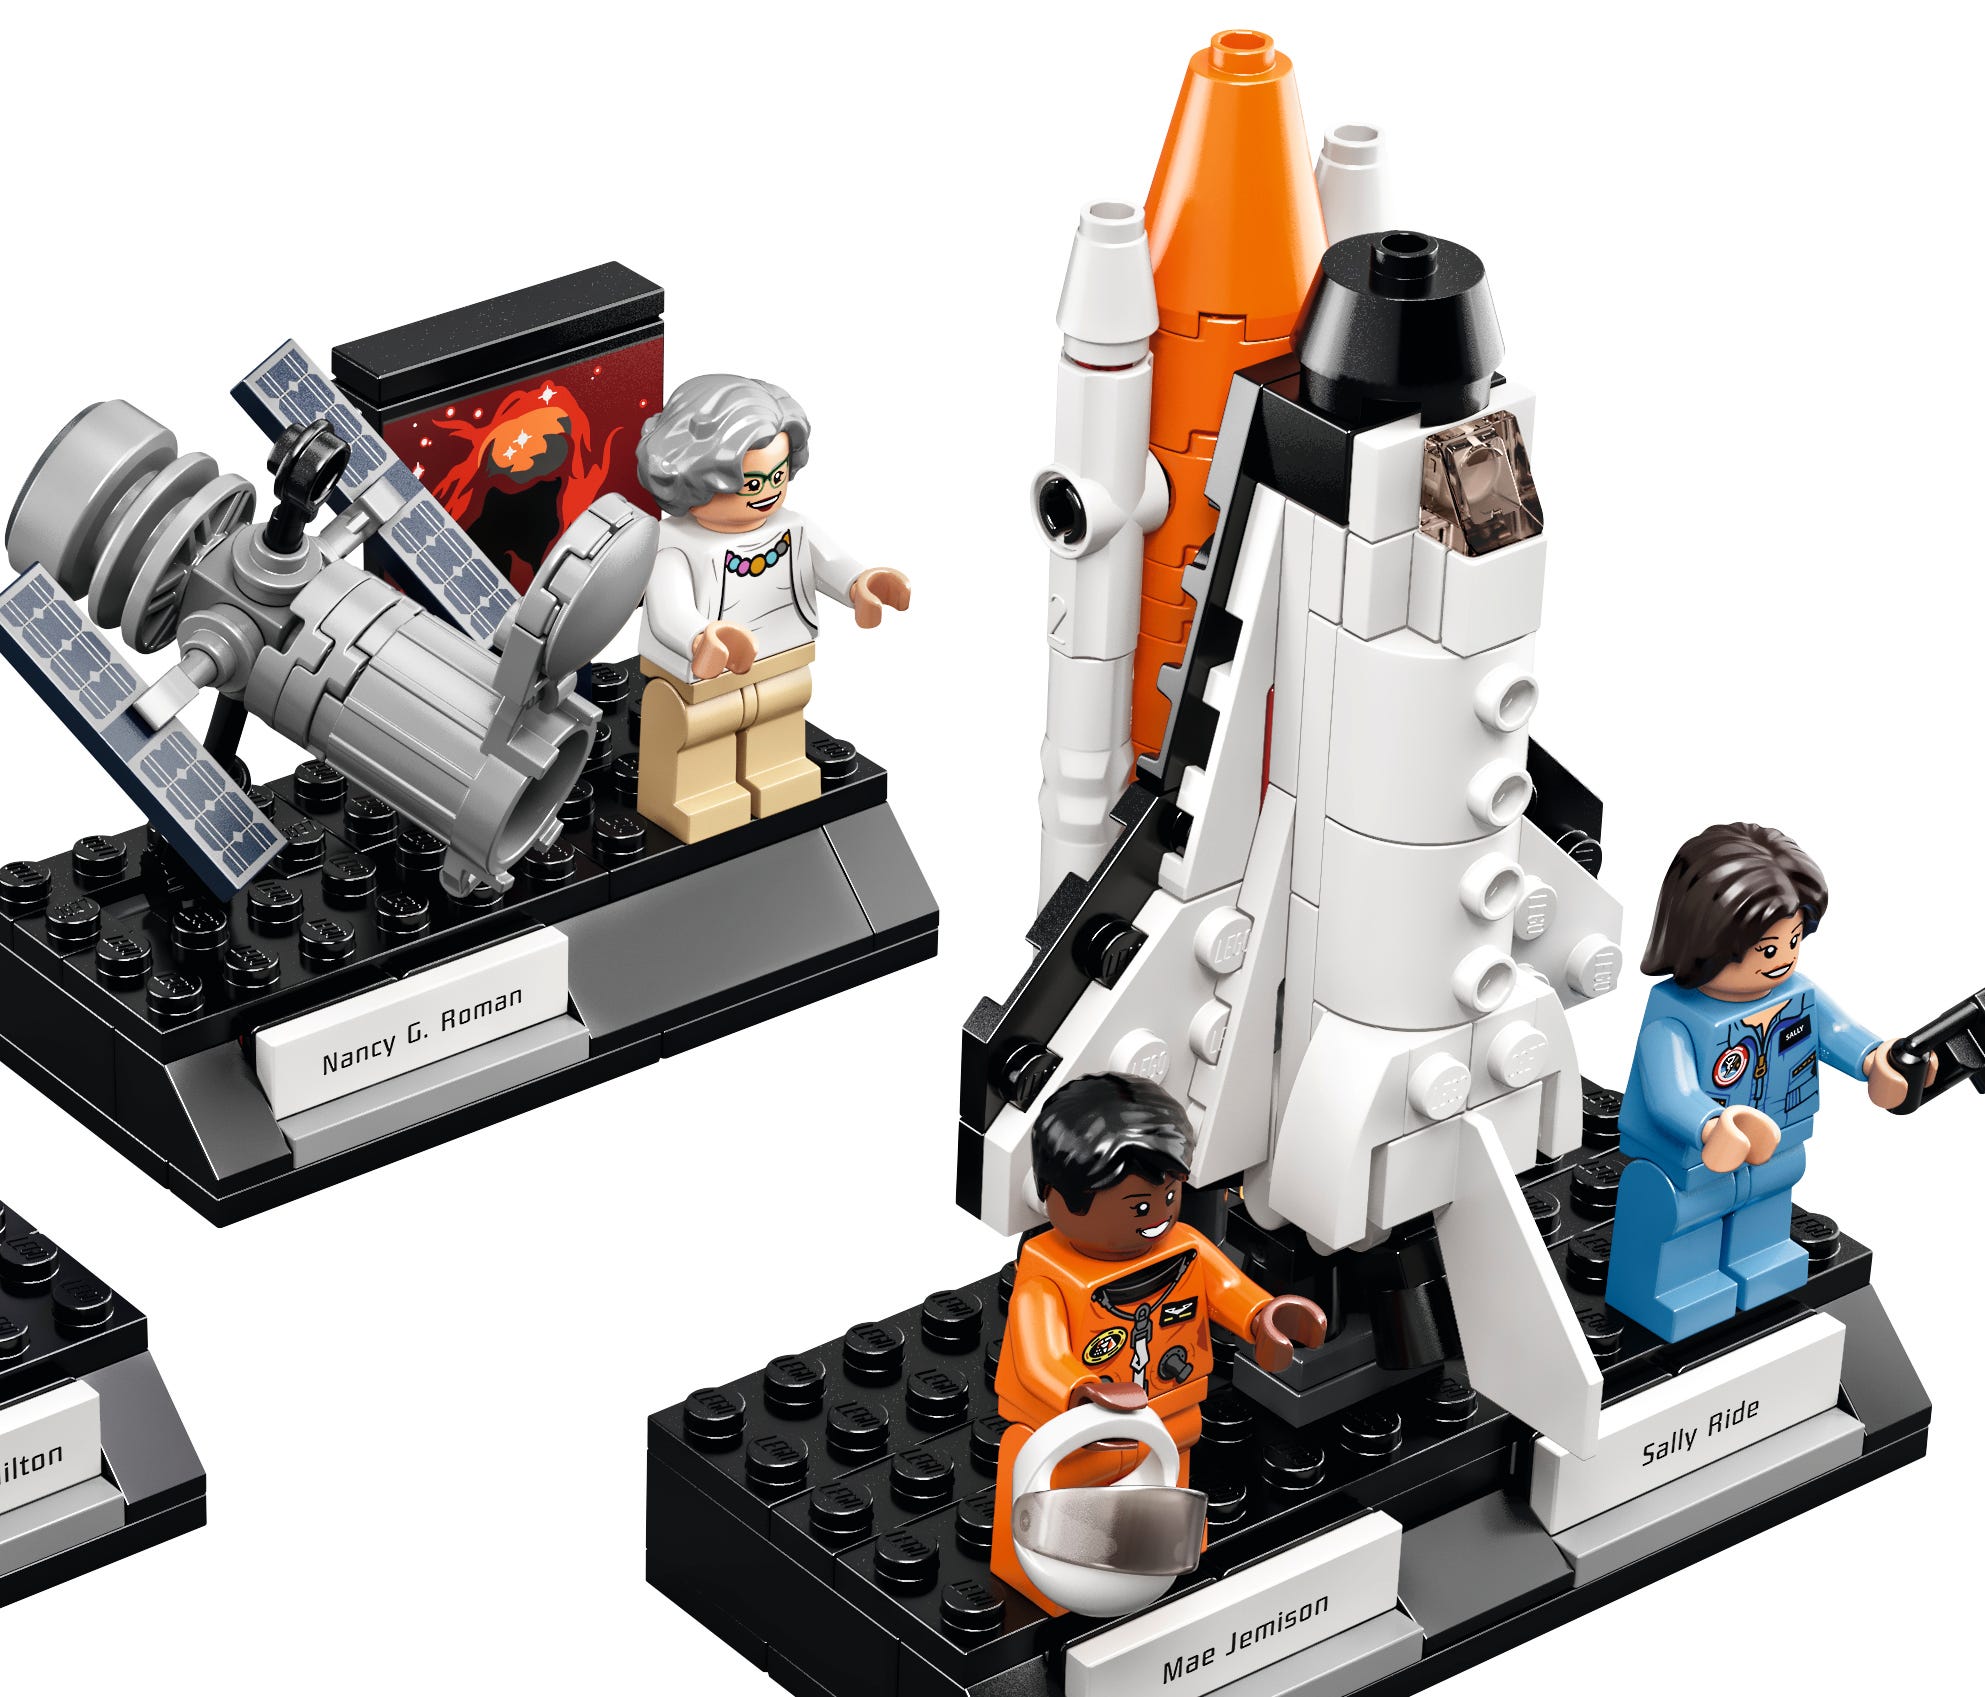 Lego's 'Women of NASA' set will launch on November 1.